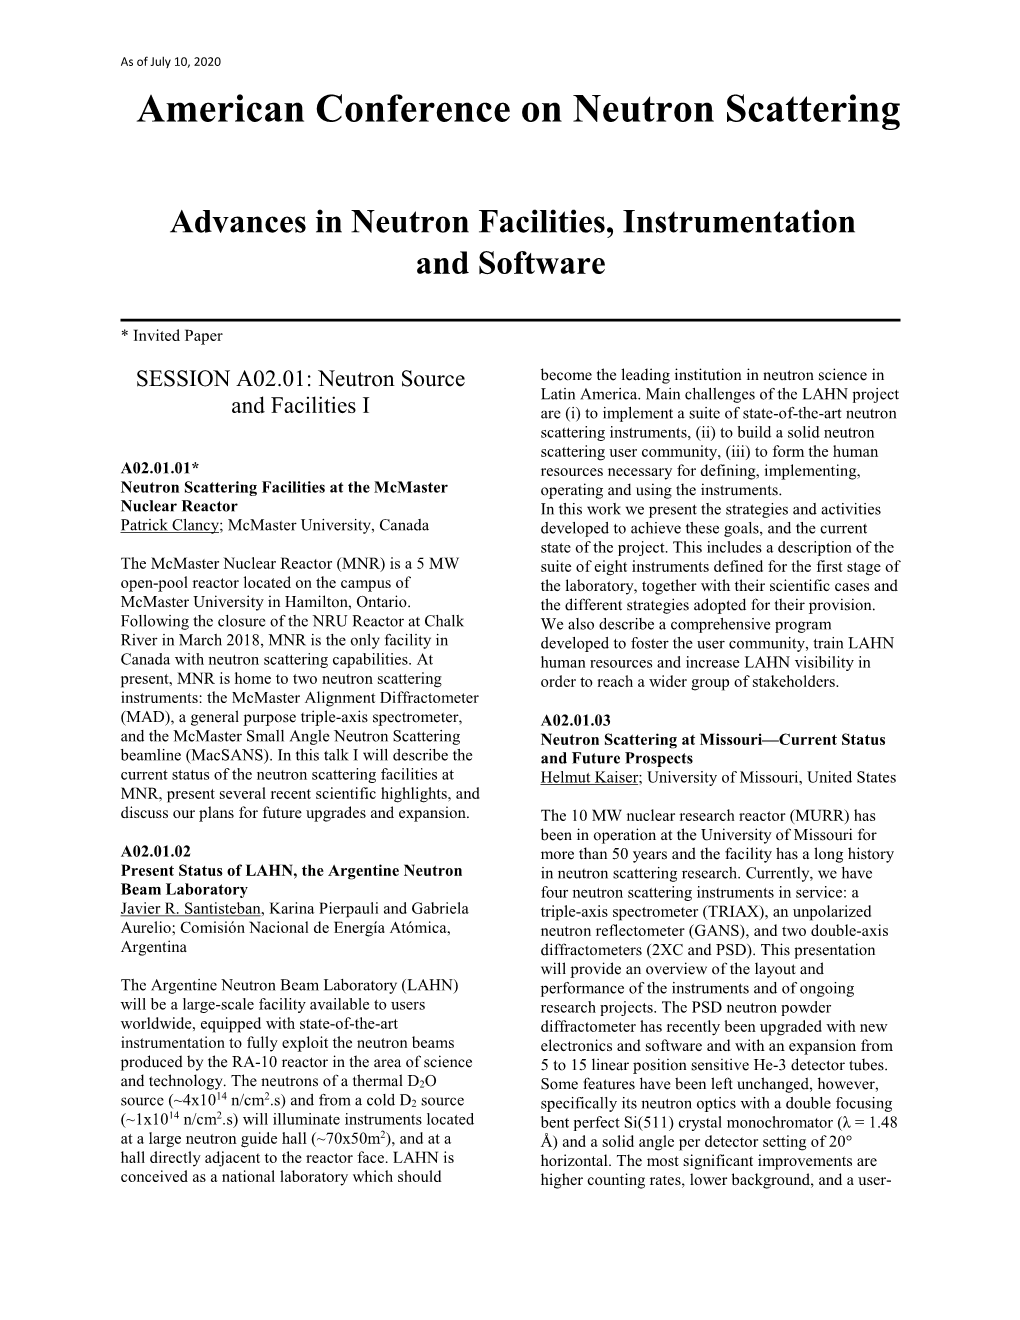 Program—Advances in Neutron Facilities, Instrumentation & Software